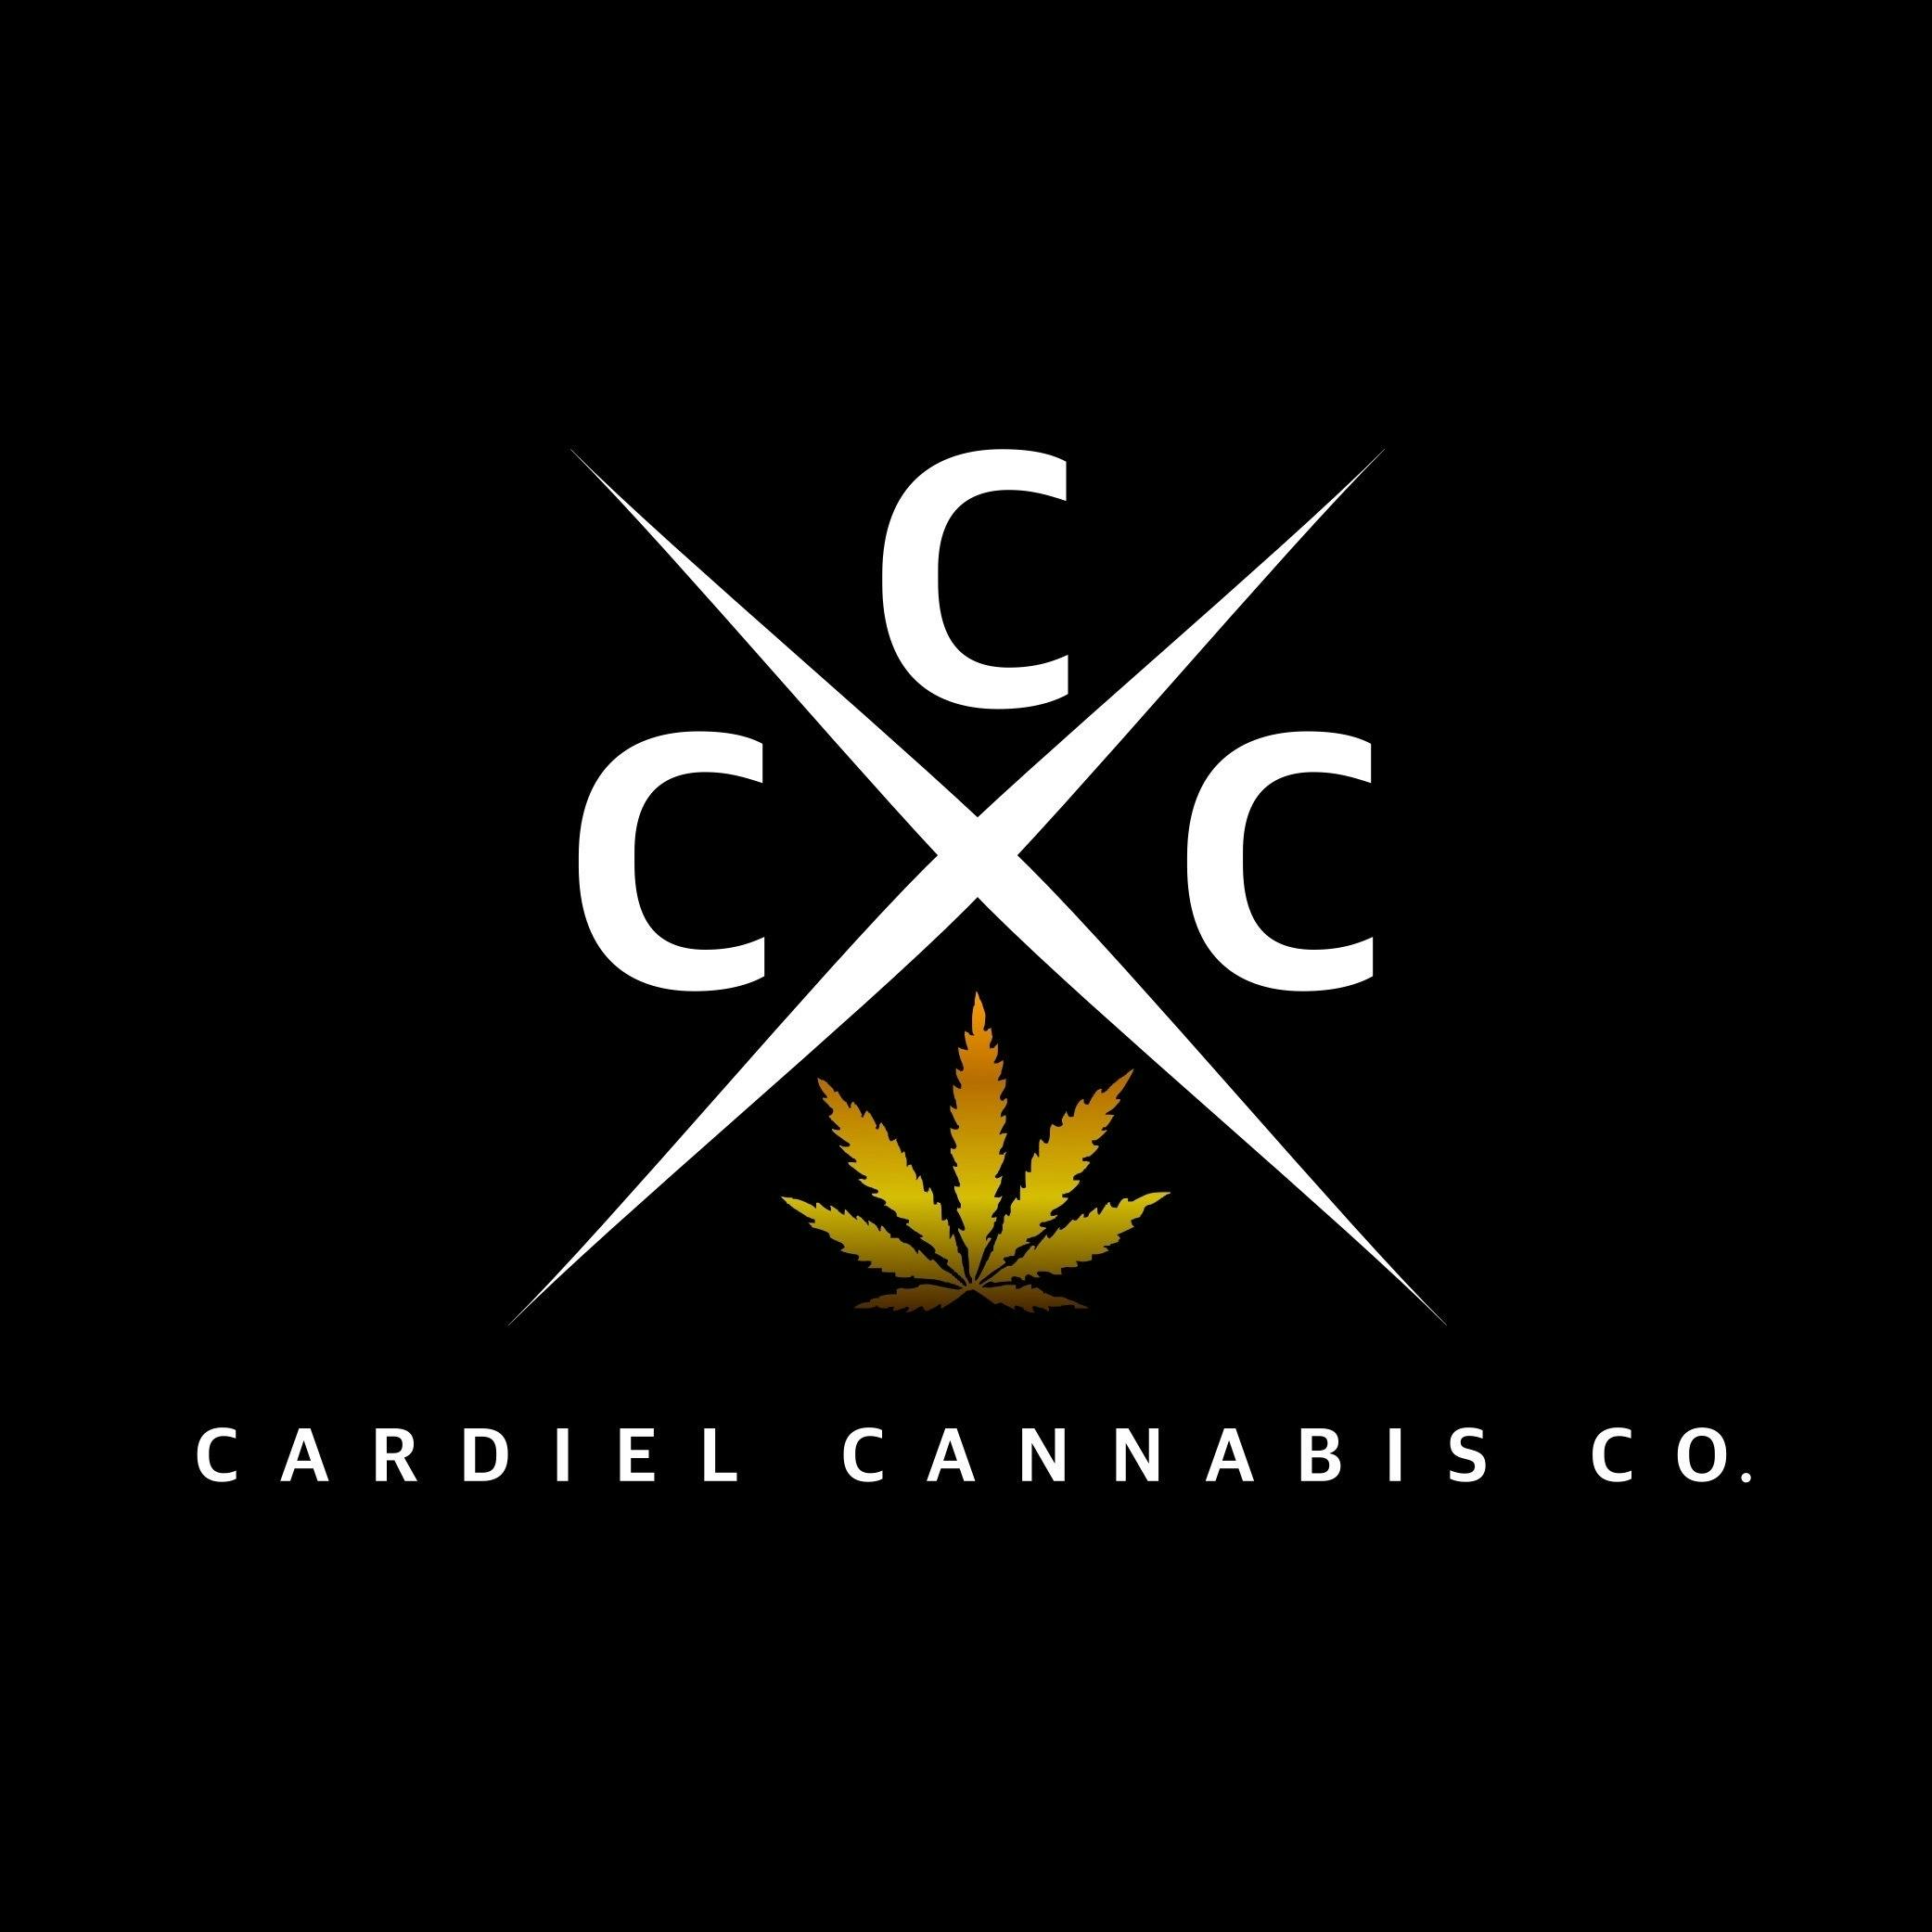 Cardiel Cannabis Co.